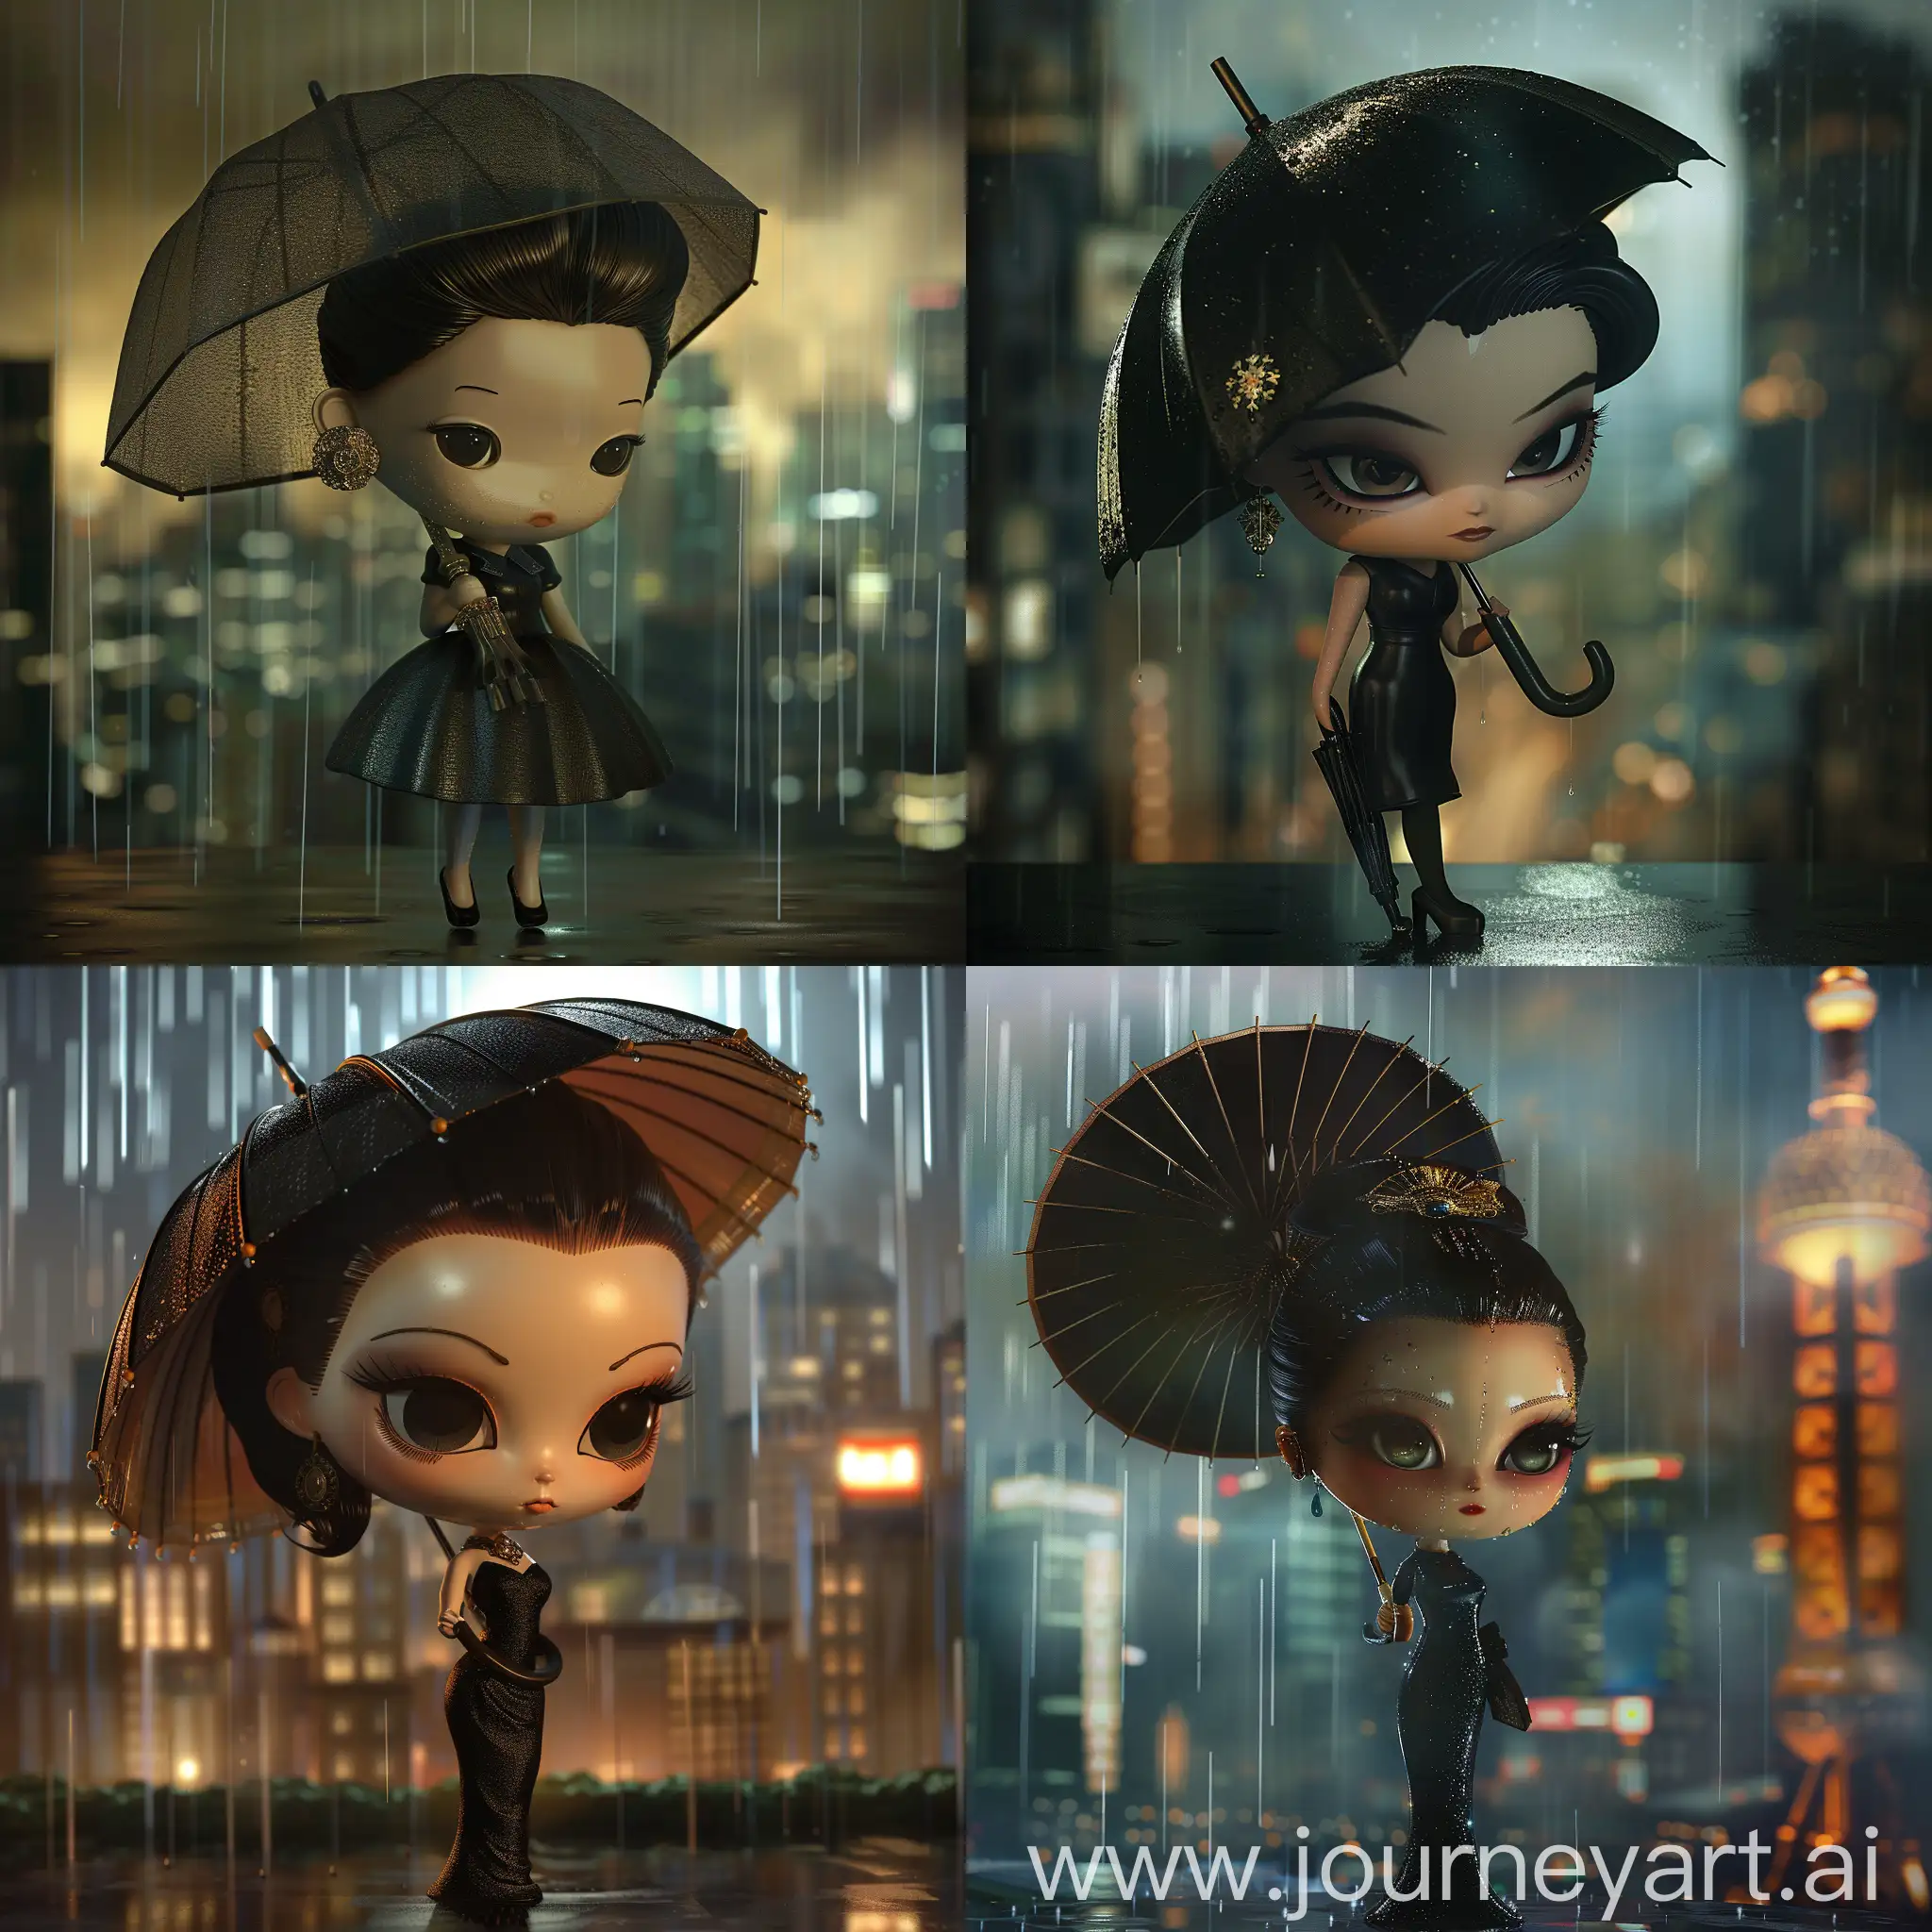 Elegant-Chibi-Woman-in-Black-Dress-with-Umbrella-Facing-Rainstorm